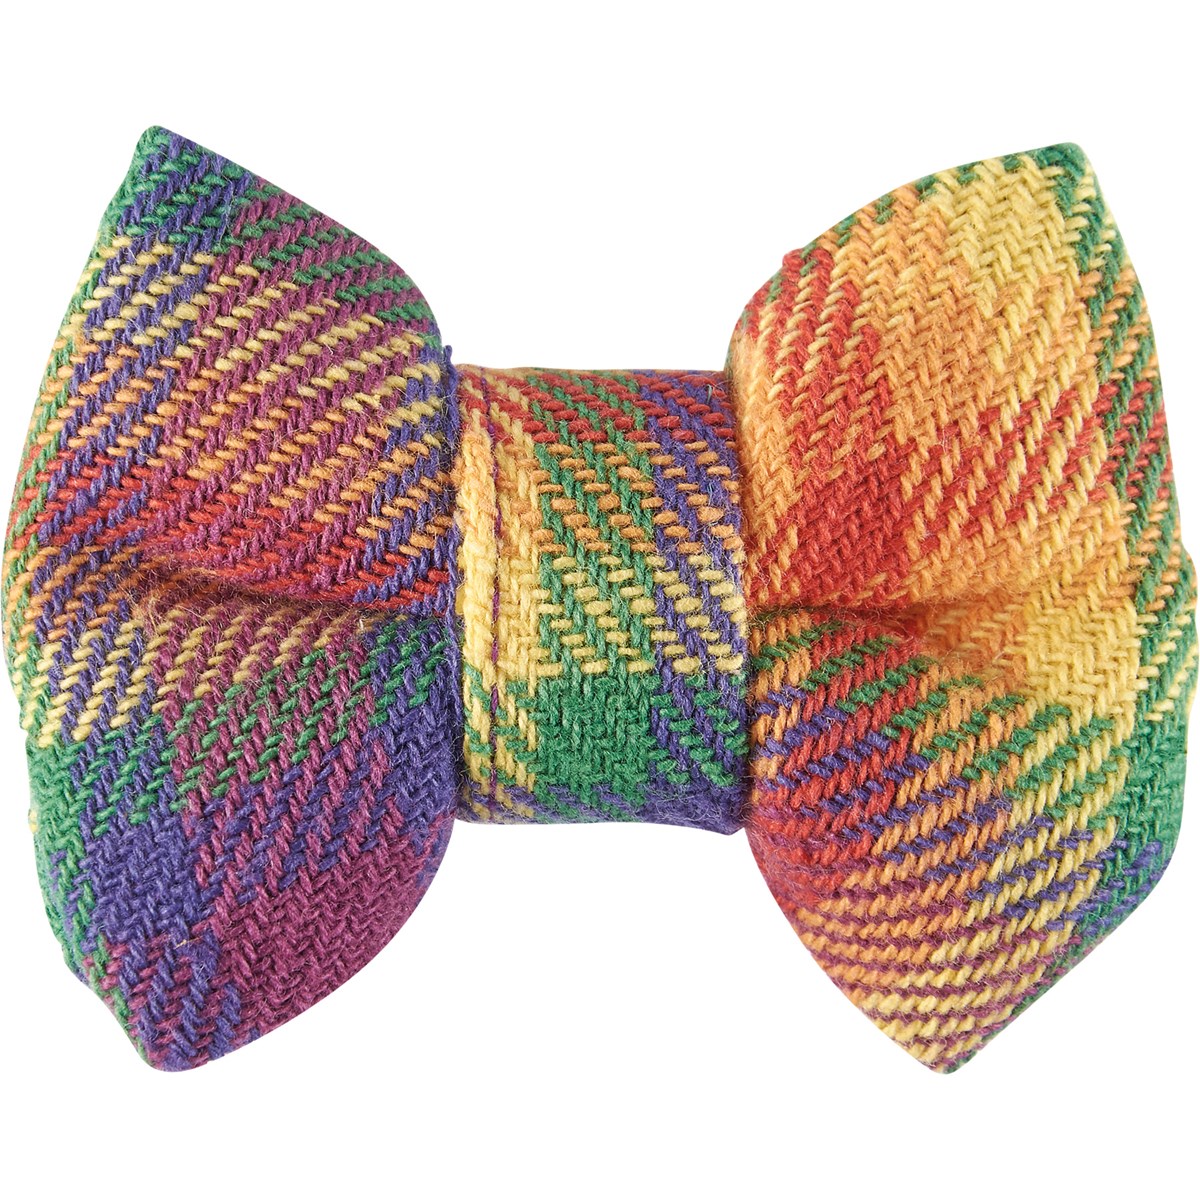 Rainbow Plaid Small Pet Bow Tie Set - Cotton, Hook-and-Loop Fastener